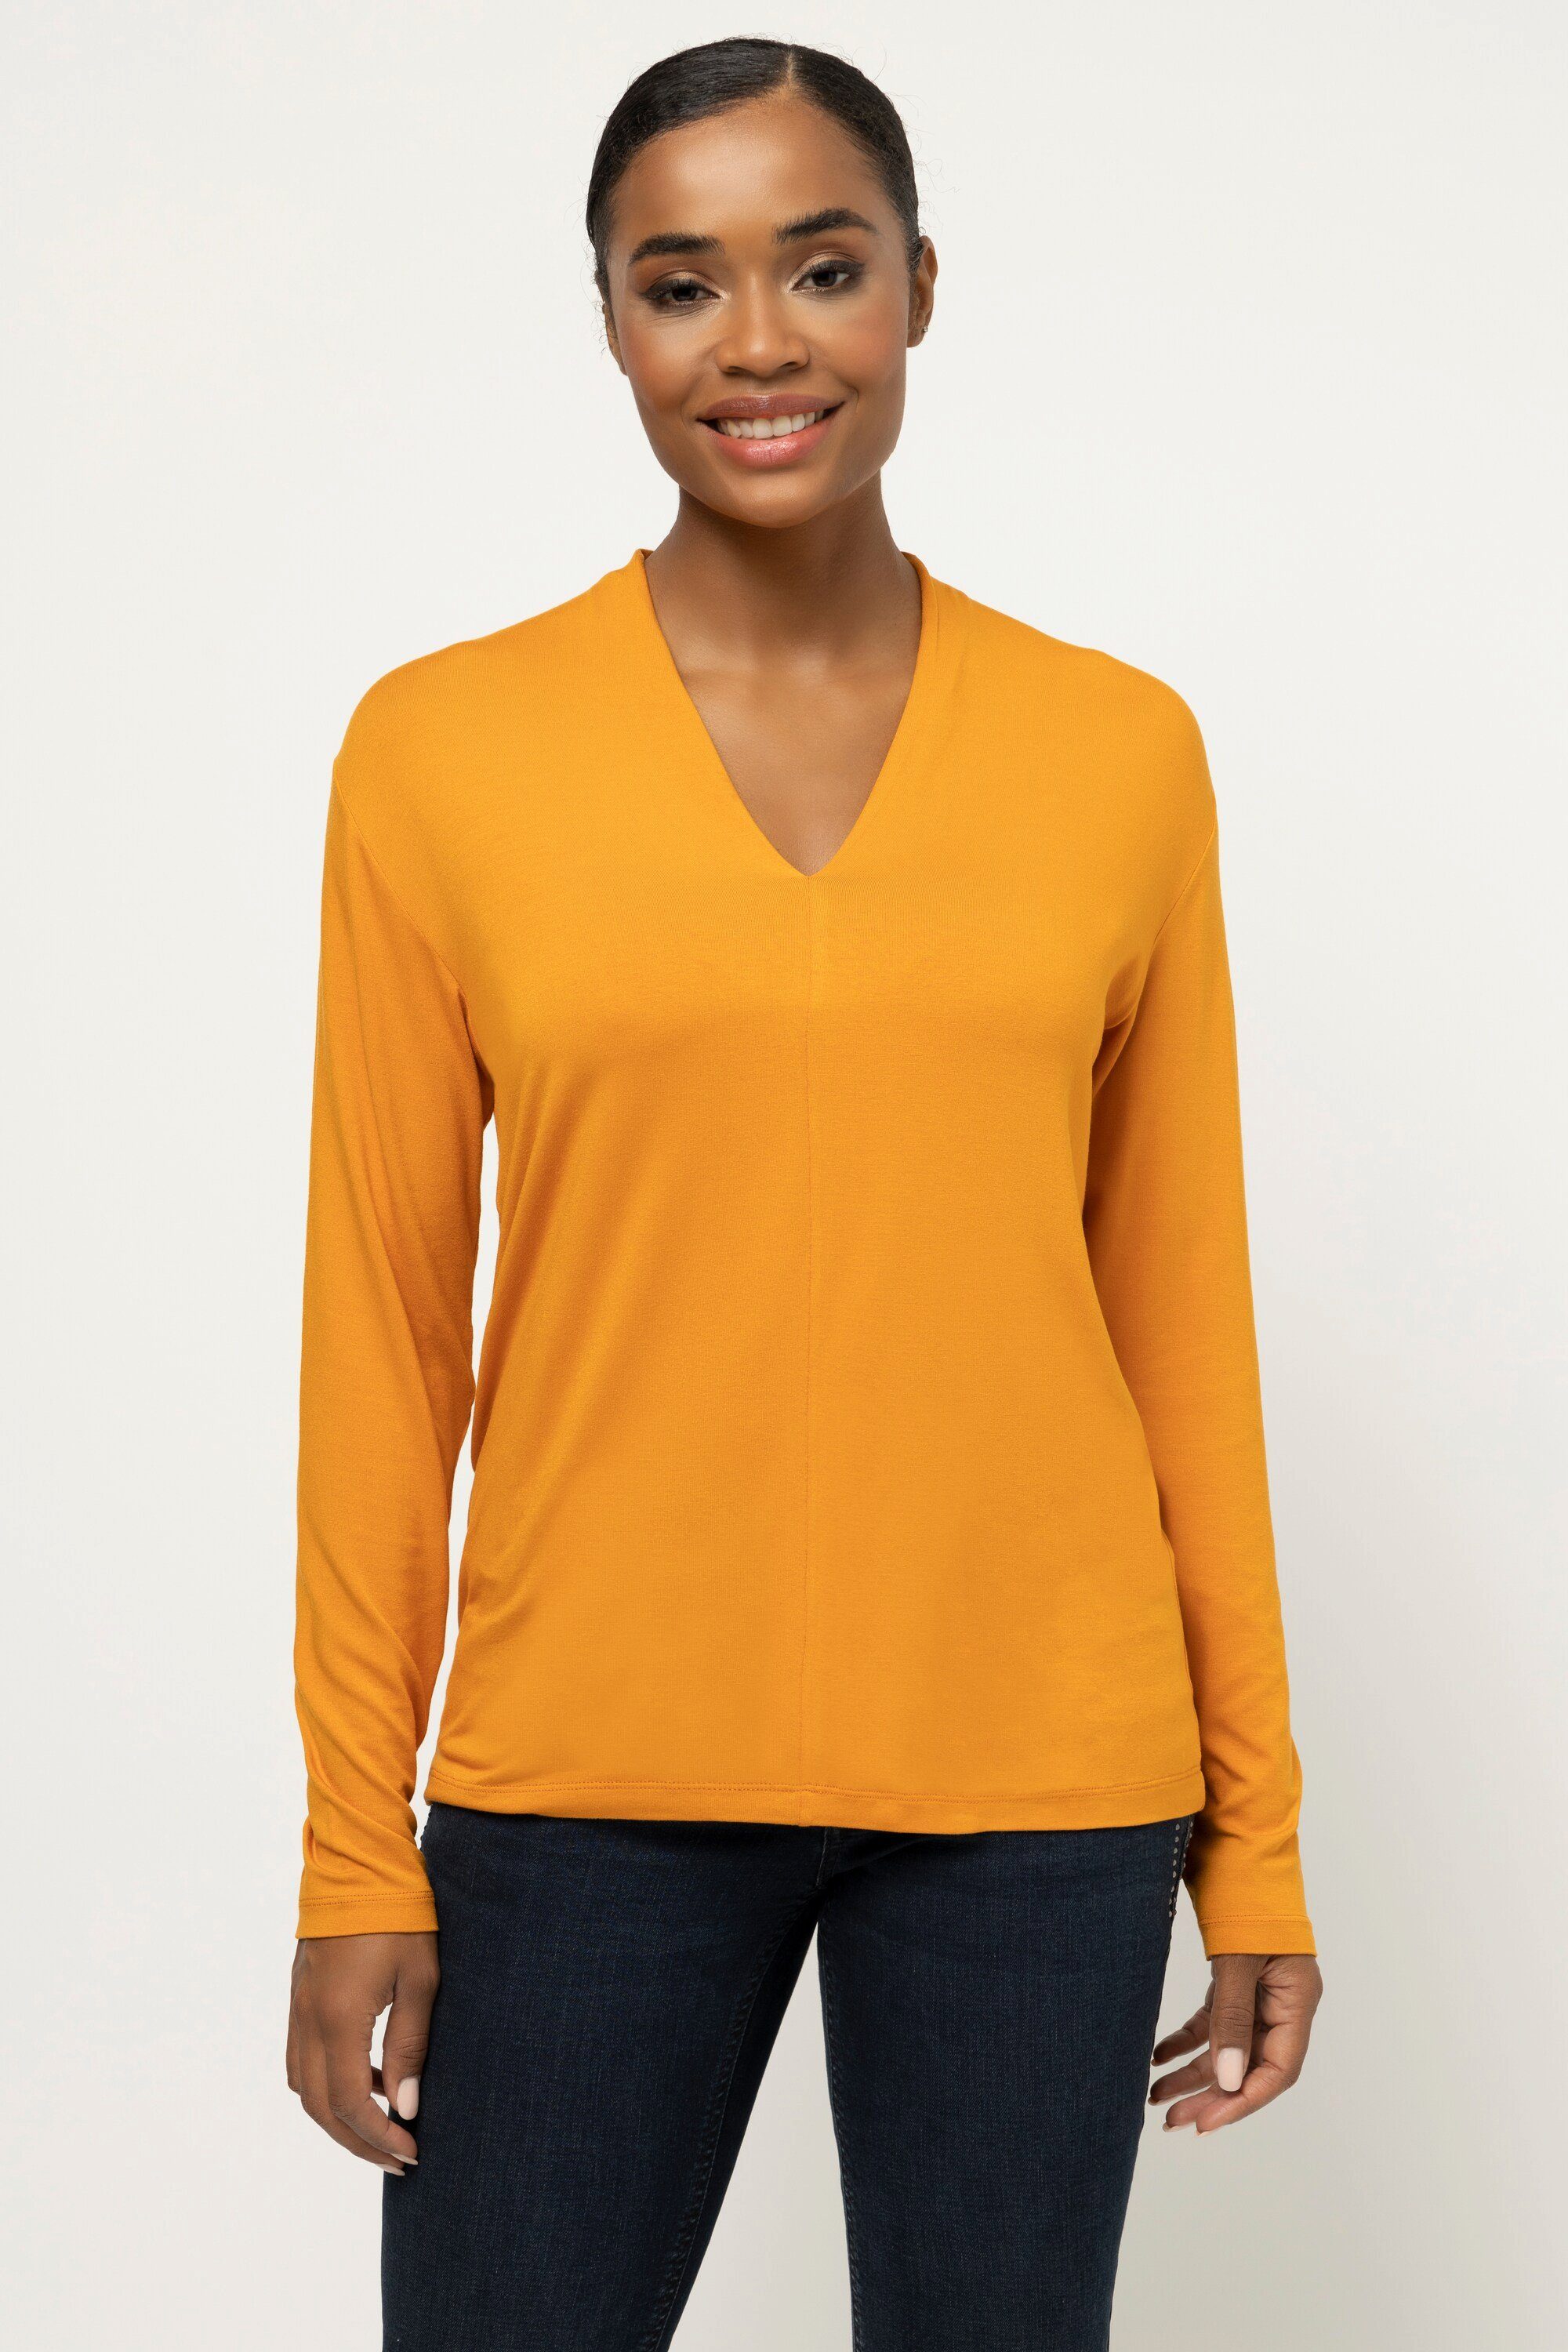 Aktionspreis Gina Laura Shirt Oversized orange Langarm Longsleeve V-Ausschnitt